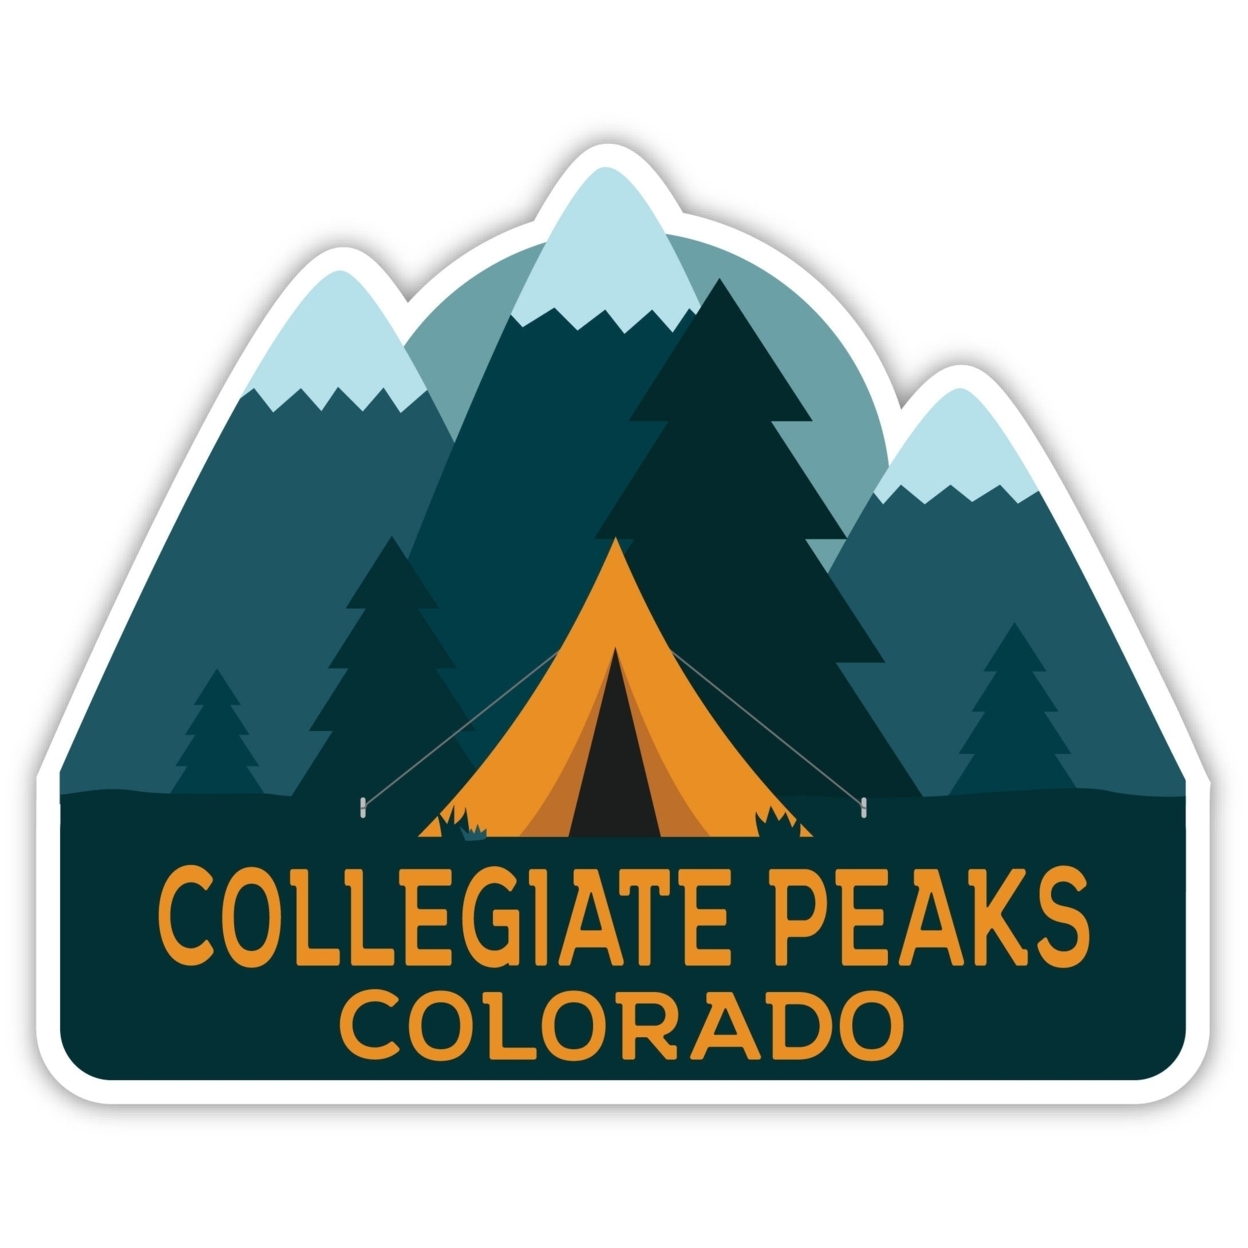 Collegiate Peaks Colorado Souvenir Decorative Stickers (Choose Theme And Size) - 4-Pack, 2-Inch, Tent